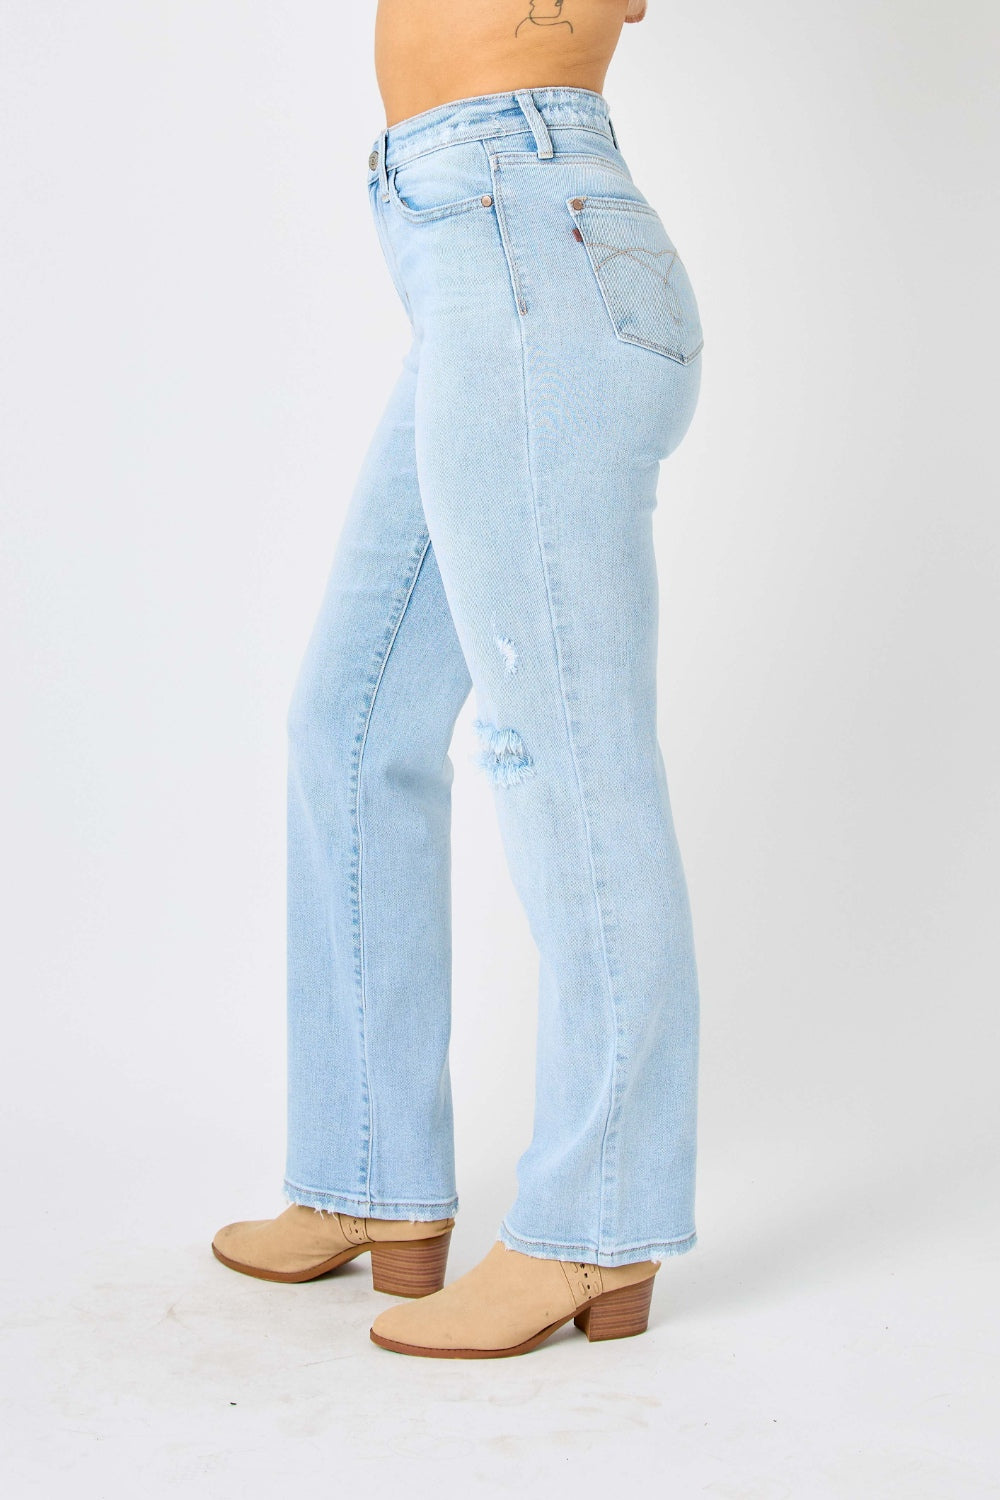 Jeans For Women - Customhoo